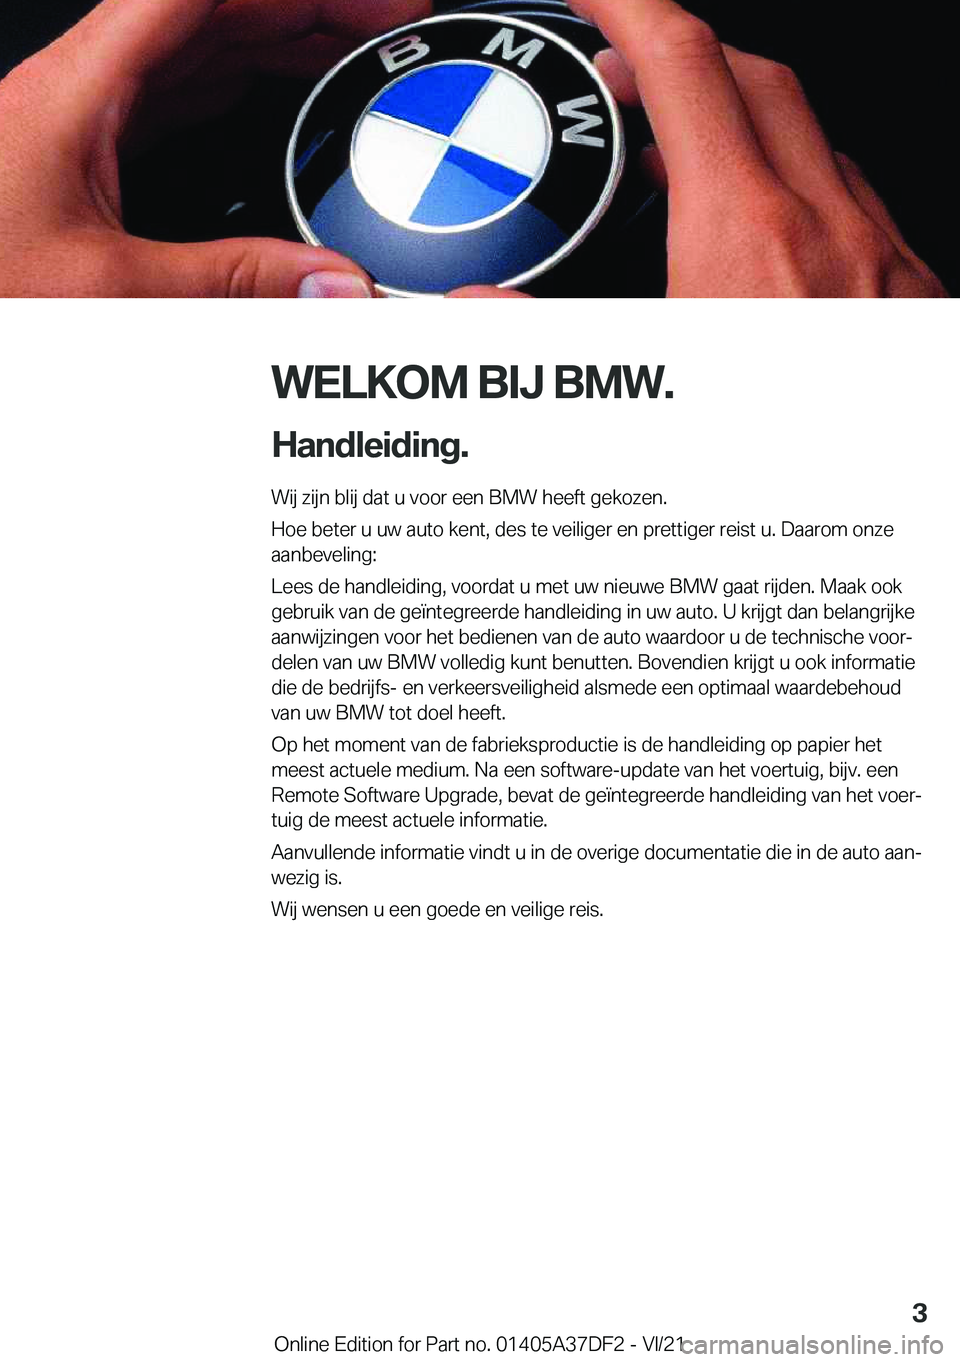 BMW M8 GRAN COUPE 2022  Instructieboekjes (in Dutch) �W�E�L�K�O�M��B�I�J��B�M�W�.
�H�a�n�d�l�e�i�d�i�n�g�. �W�i�j��z�i�j�n��b�l�i�j��d�a�t��u��v�o�o�r��e�e�n��B�M�W��h�e�e�f�t��g�e�k�o�z�e�n�.
�H�o�e��b�e�t�e�r��u��u�w��a�u�t�o��k�e�n�t�